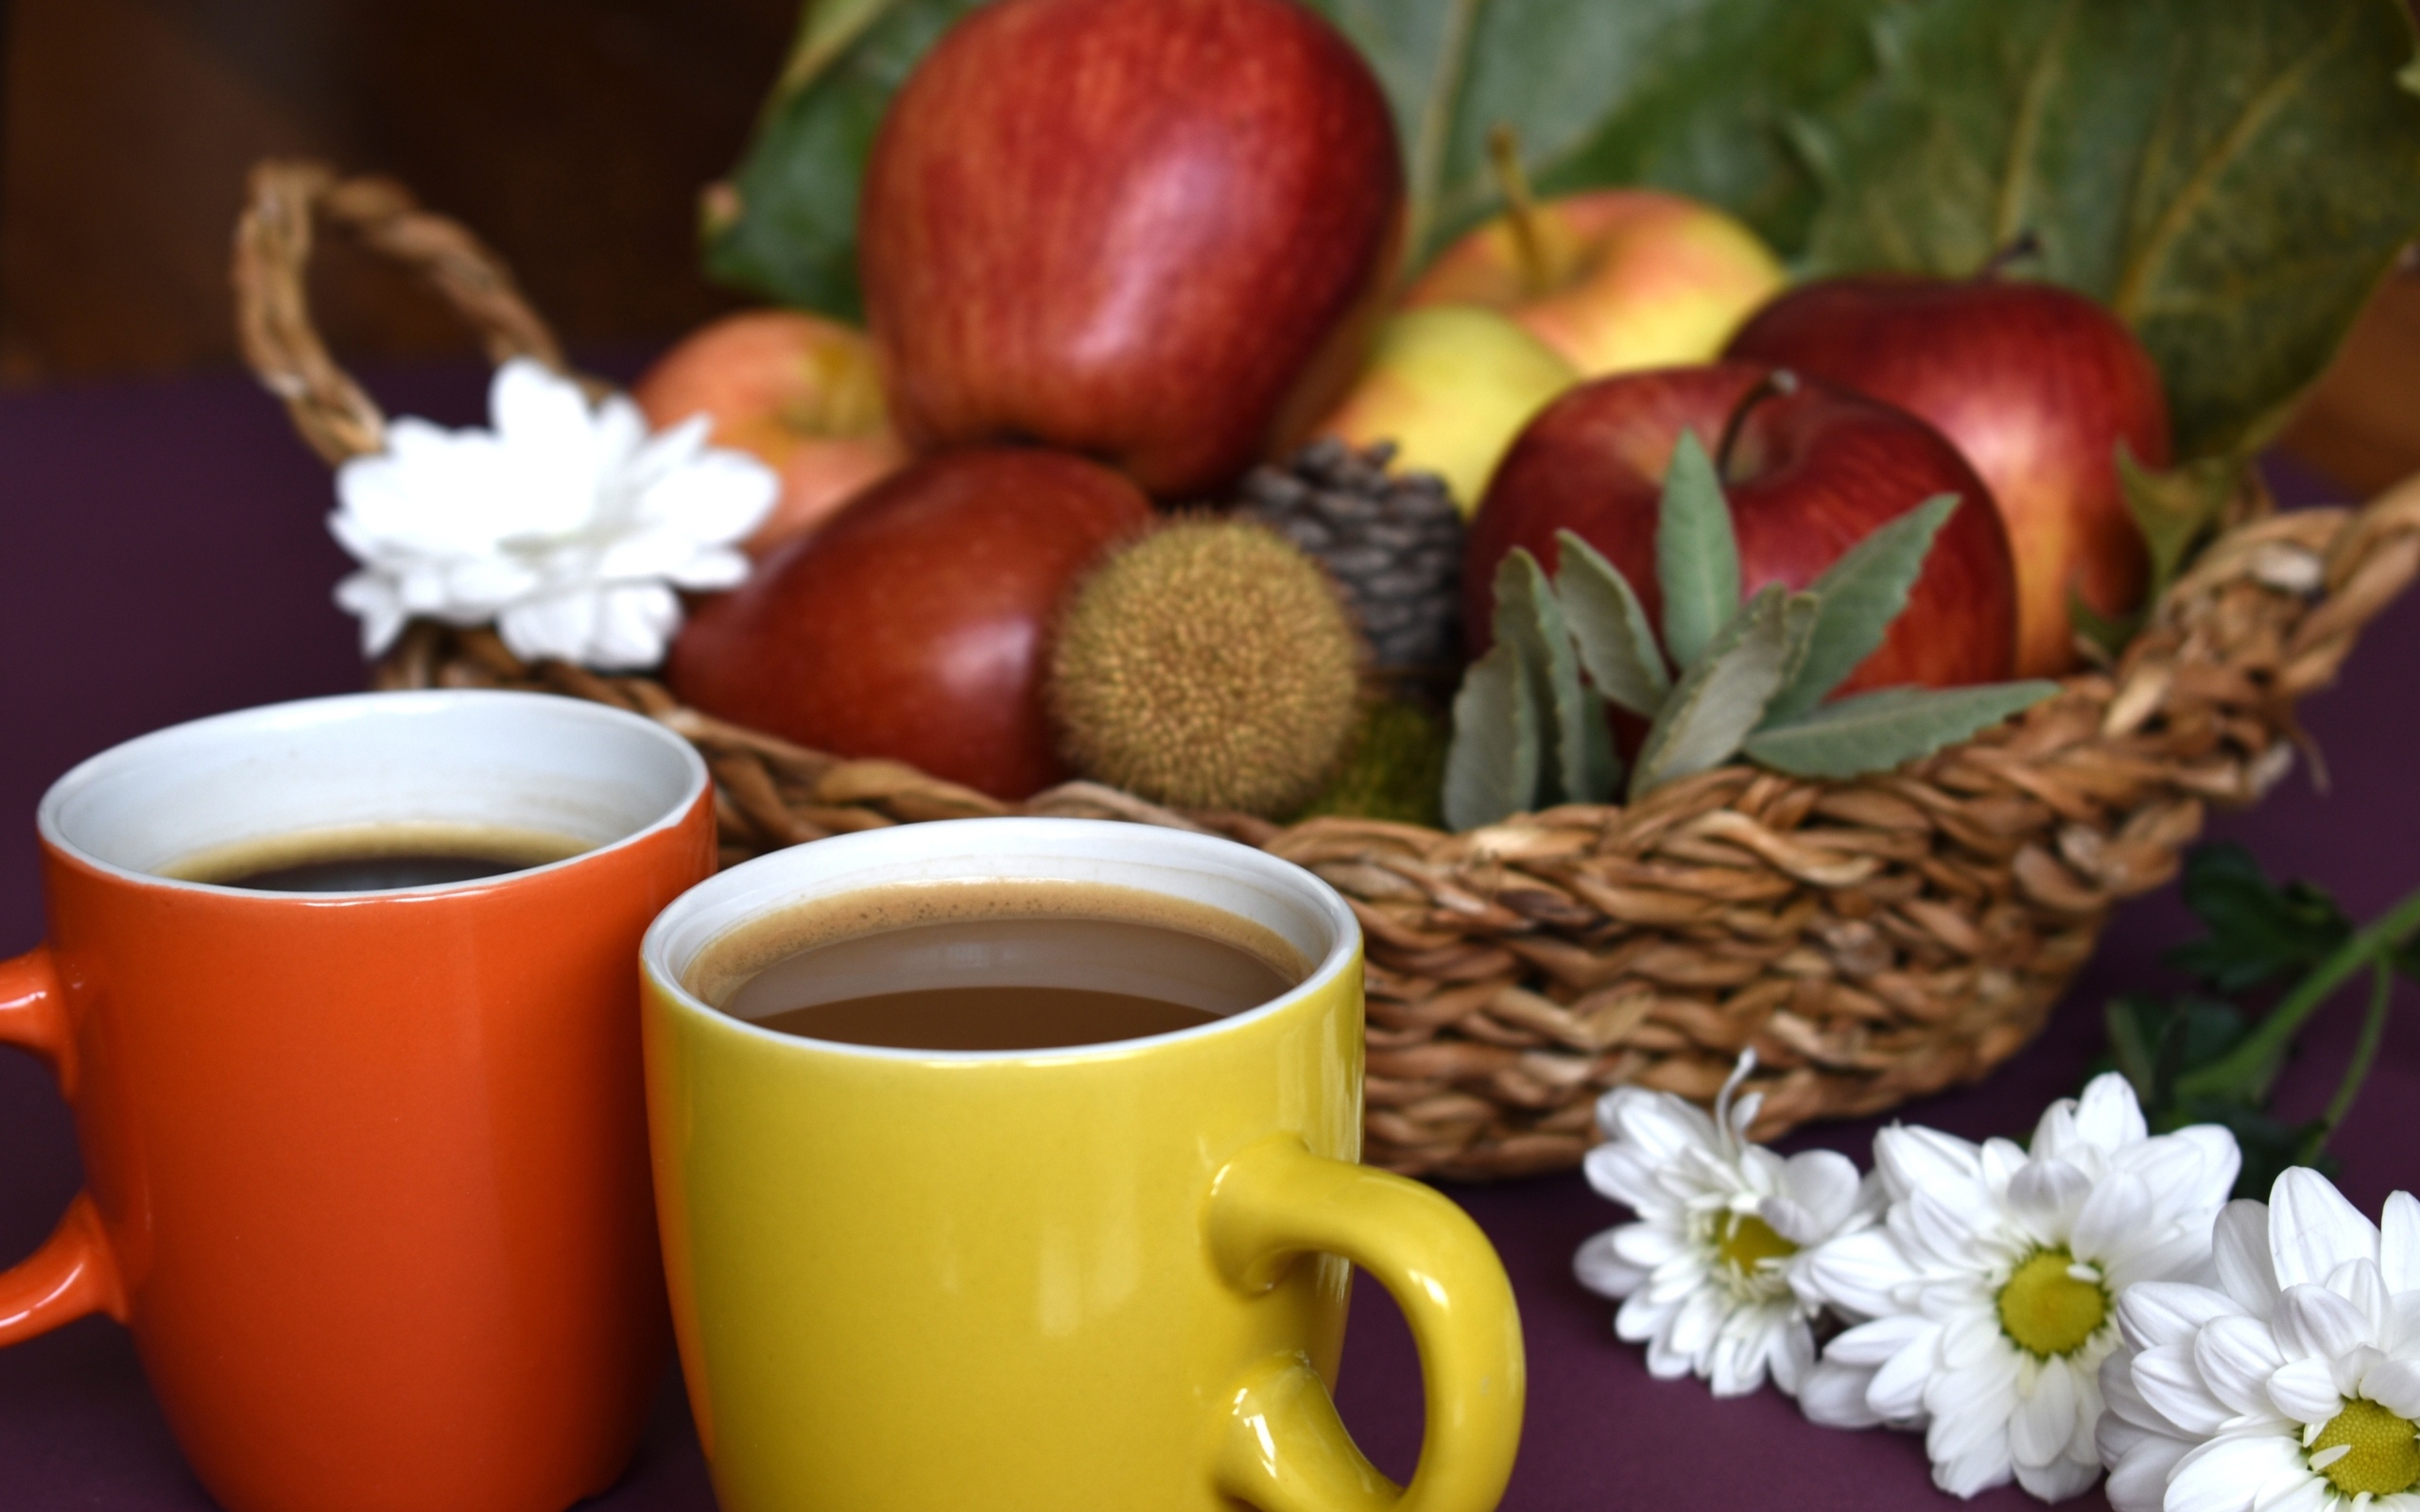 Две чашки кофе на столе с фруктами